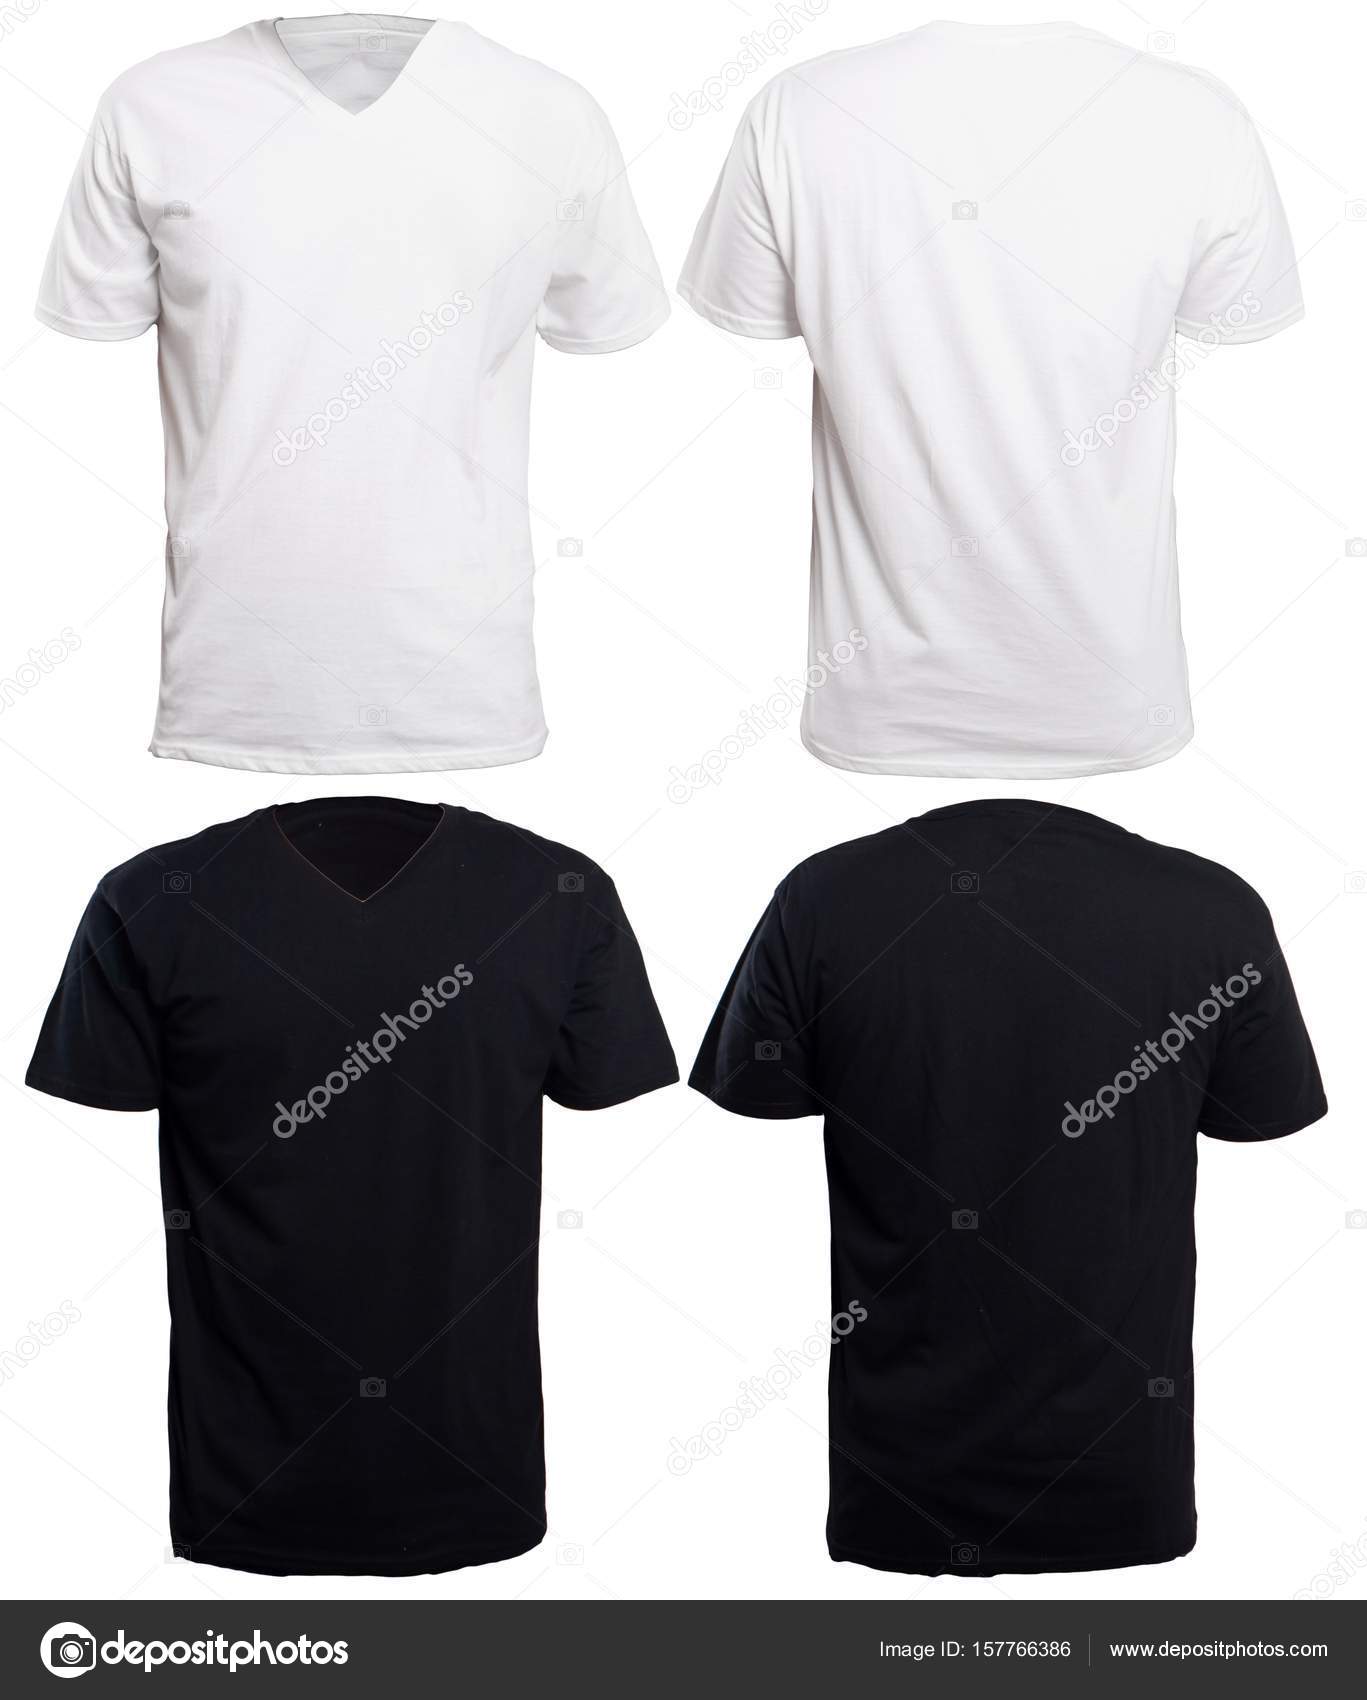 Black and White V-Neck Shirt Mock up — Stock Photo © airdone #157766386